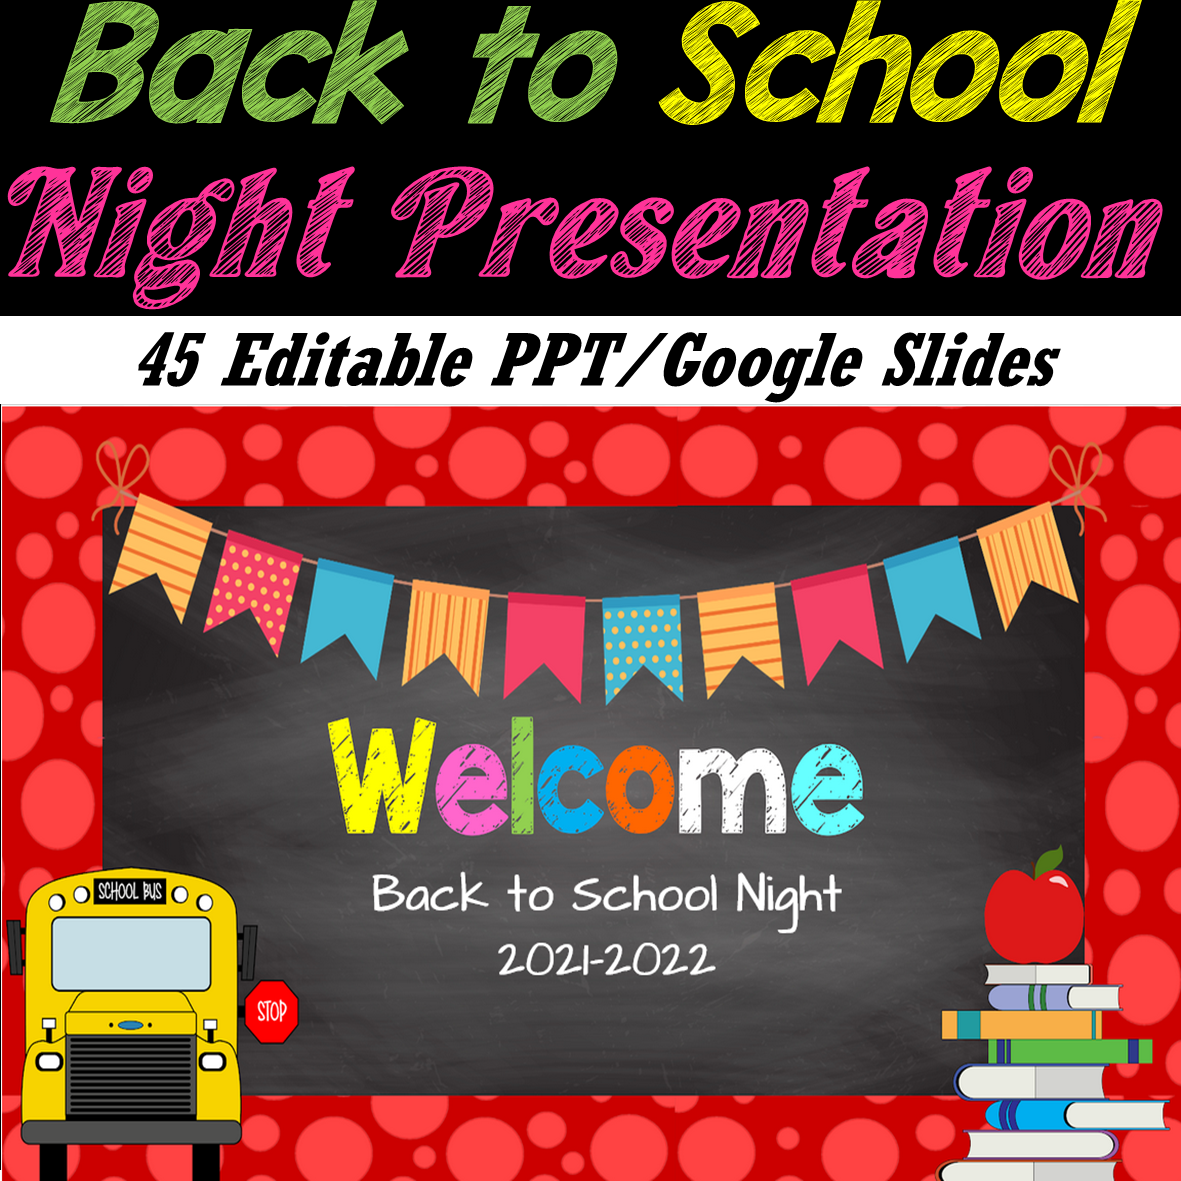 Back to School Night Presentation/ Meet The Teacher Open House-PPT/Google Slides